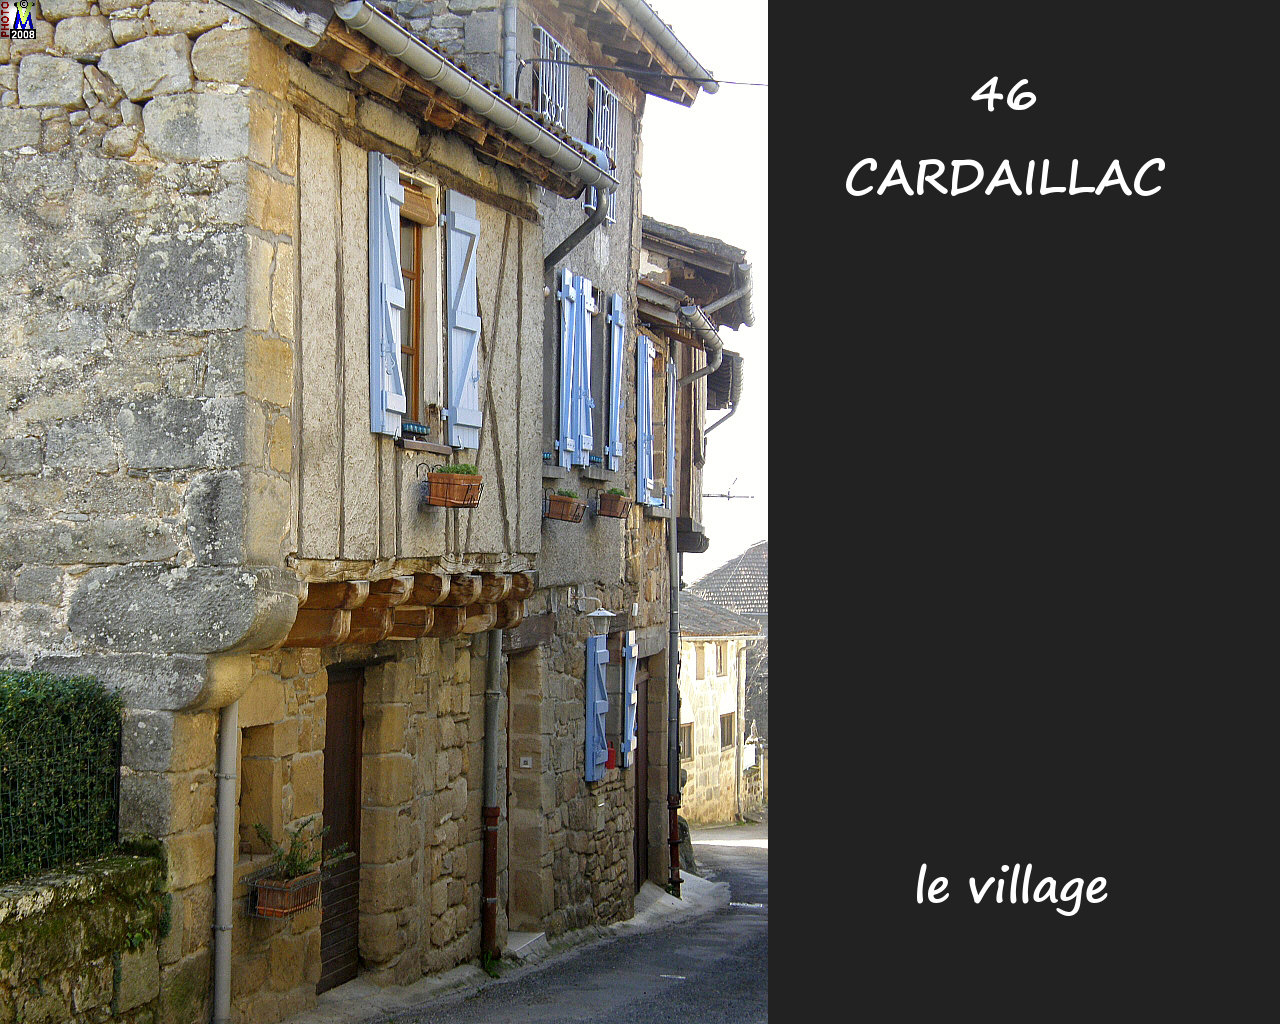 46CARDAILLAC_village_224.jpg